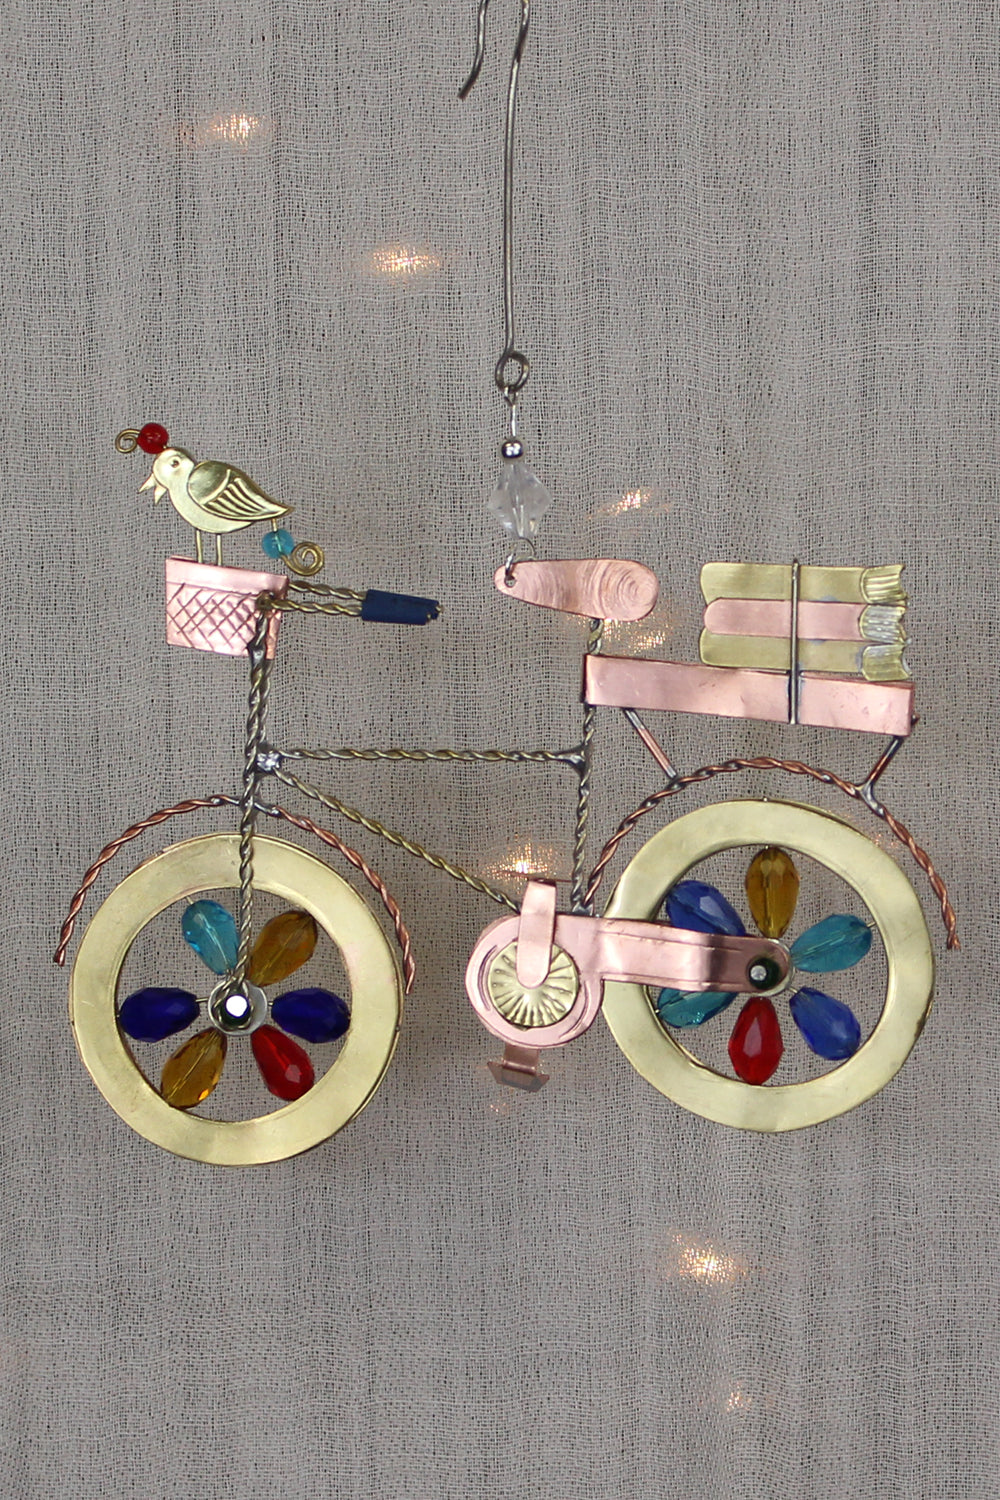 Summertime Cruiser Bicycle Fair Trade Ornament 05419